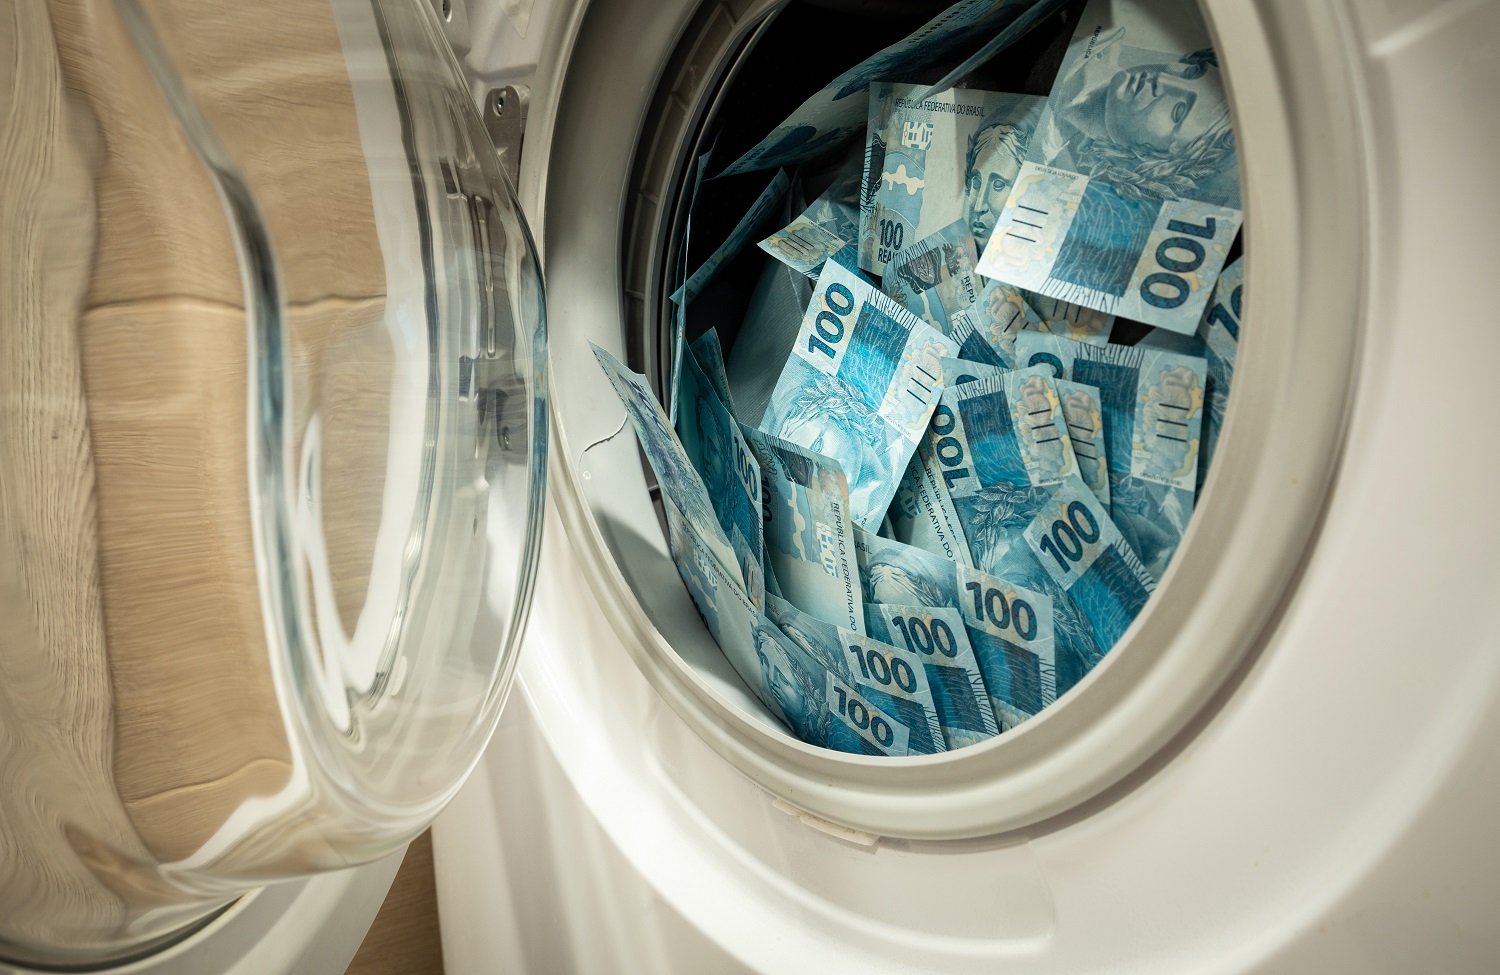 Brazilian banknotes stuffed into a washing machine.